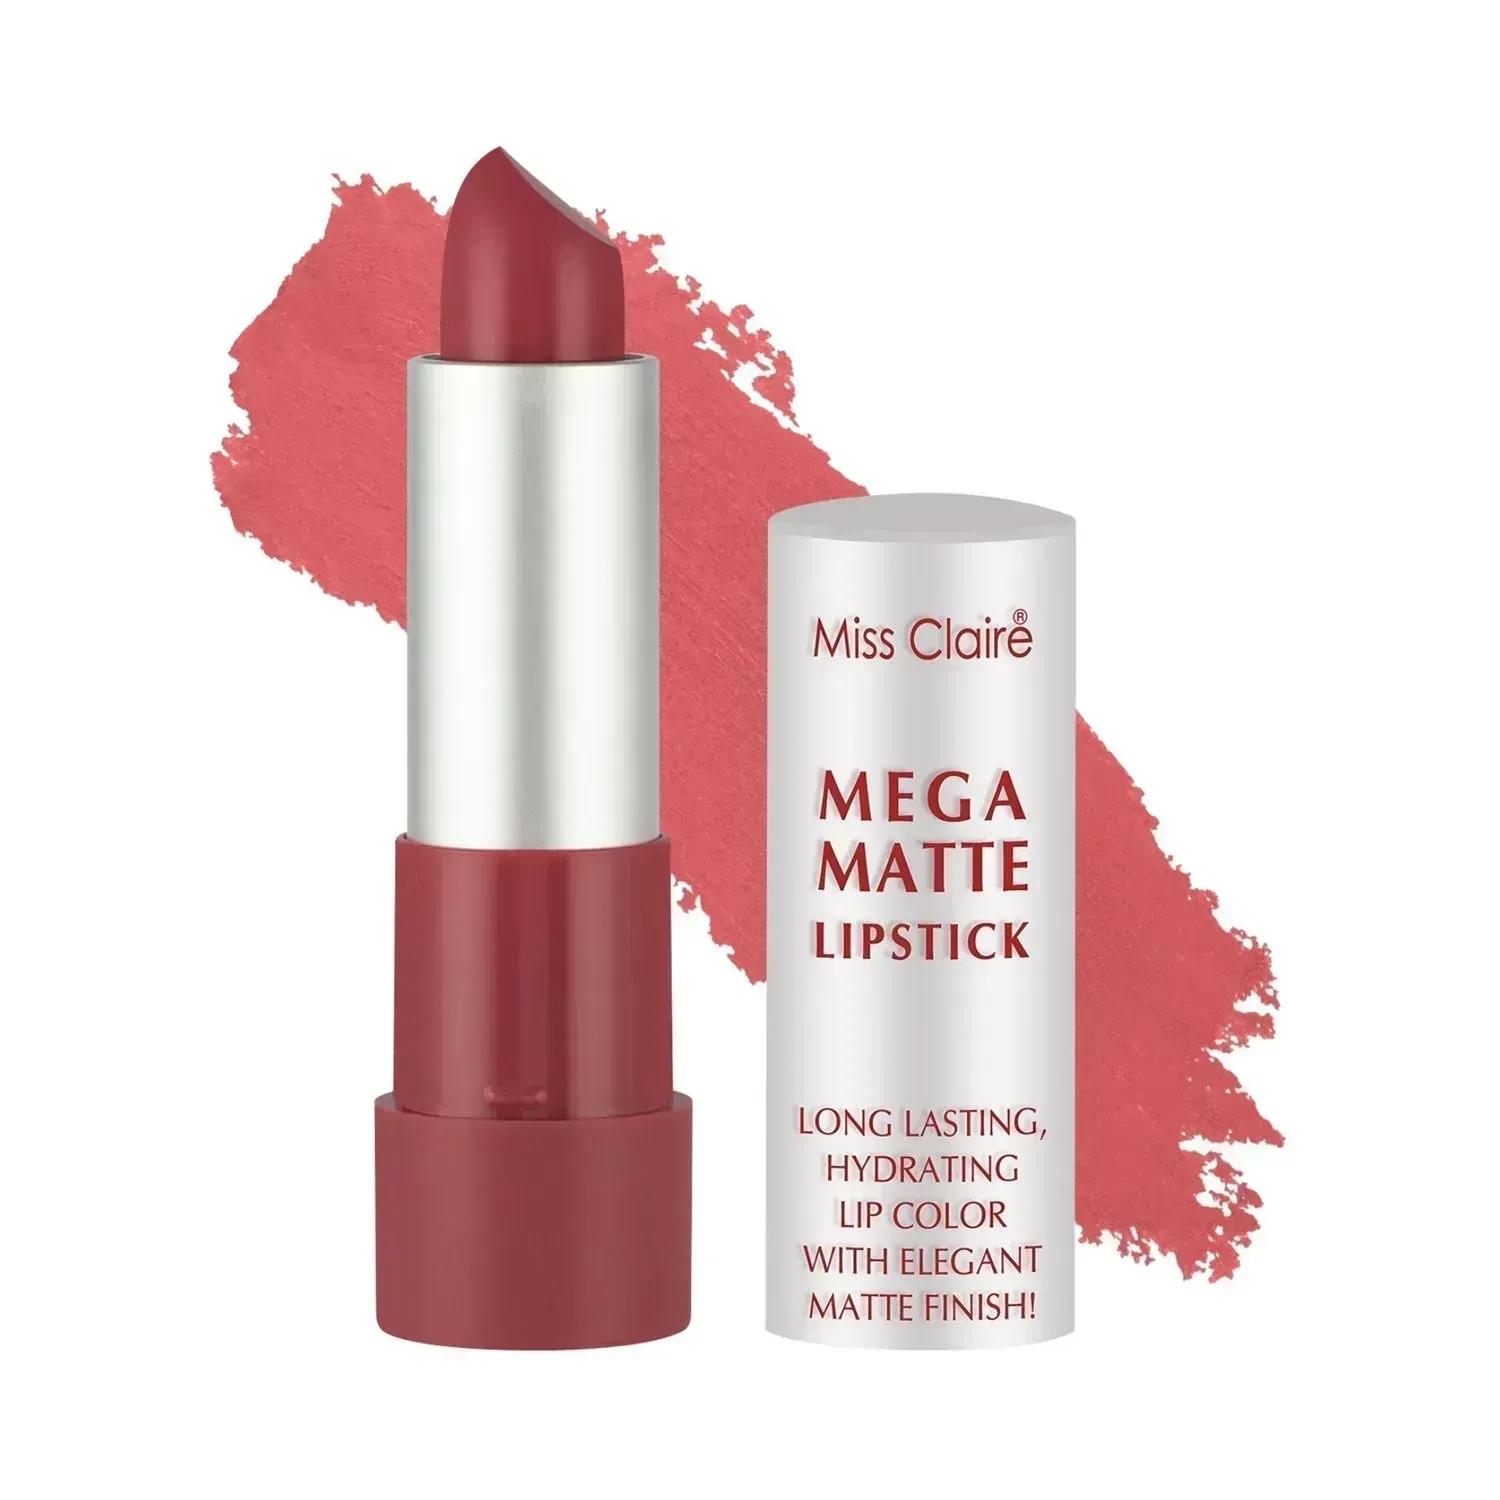 miss claire mega matte lipstick - 15 peach (3.5g)